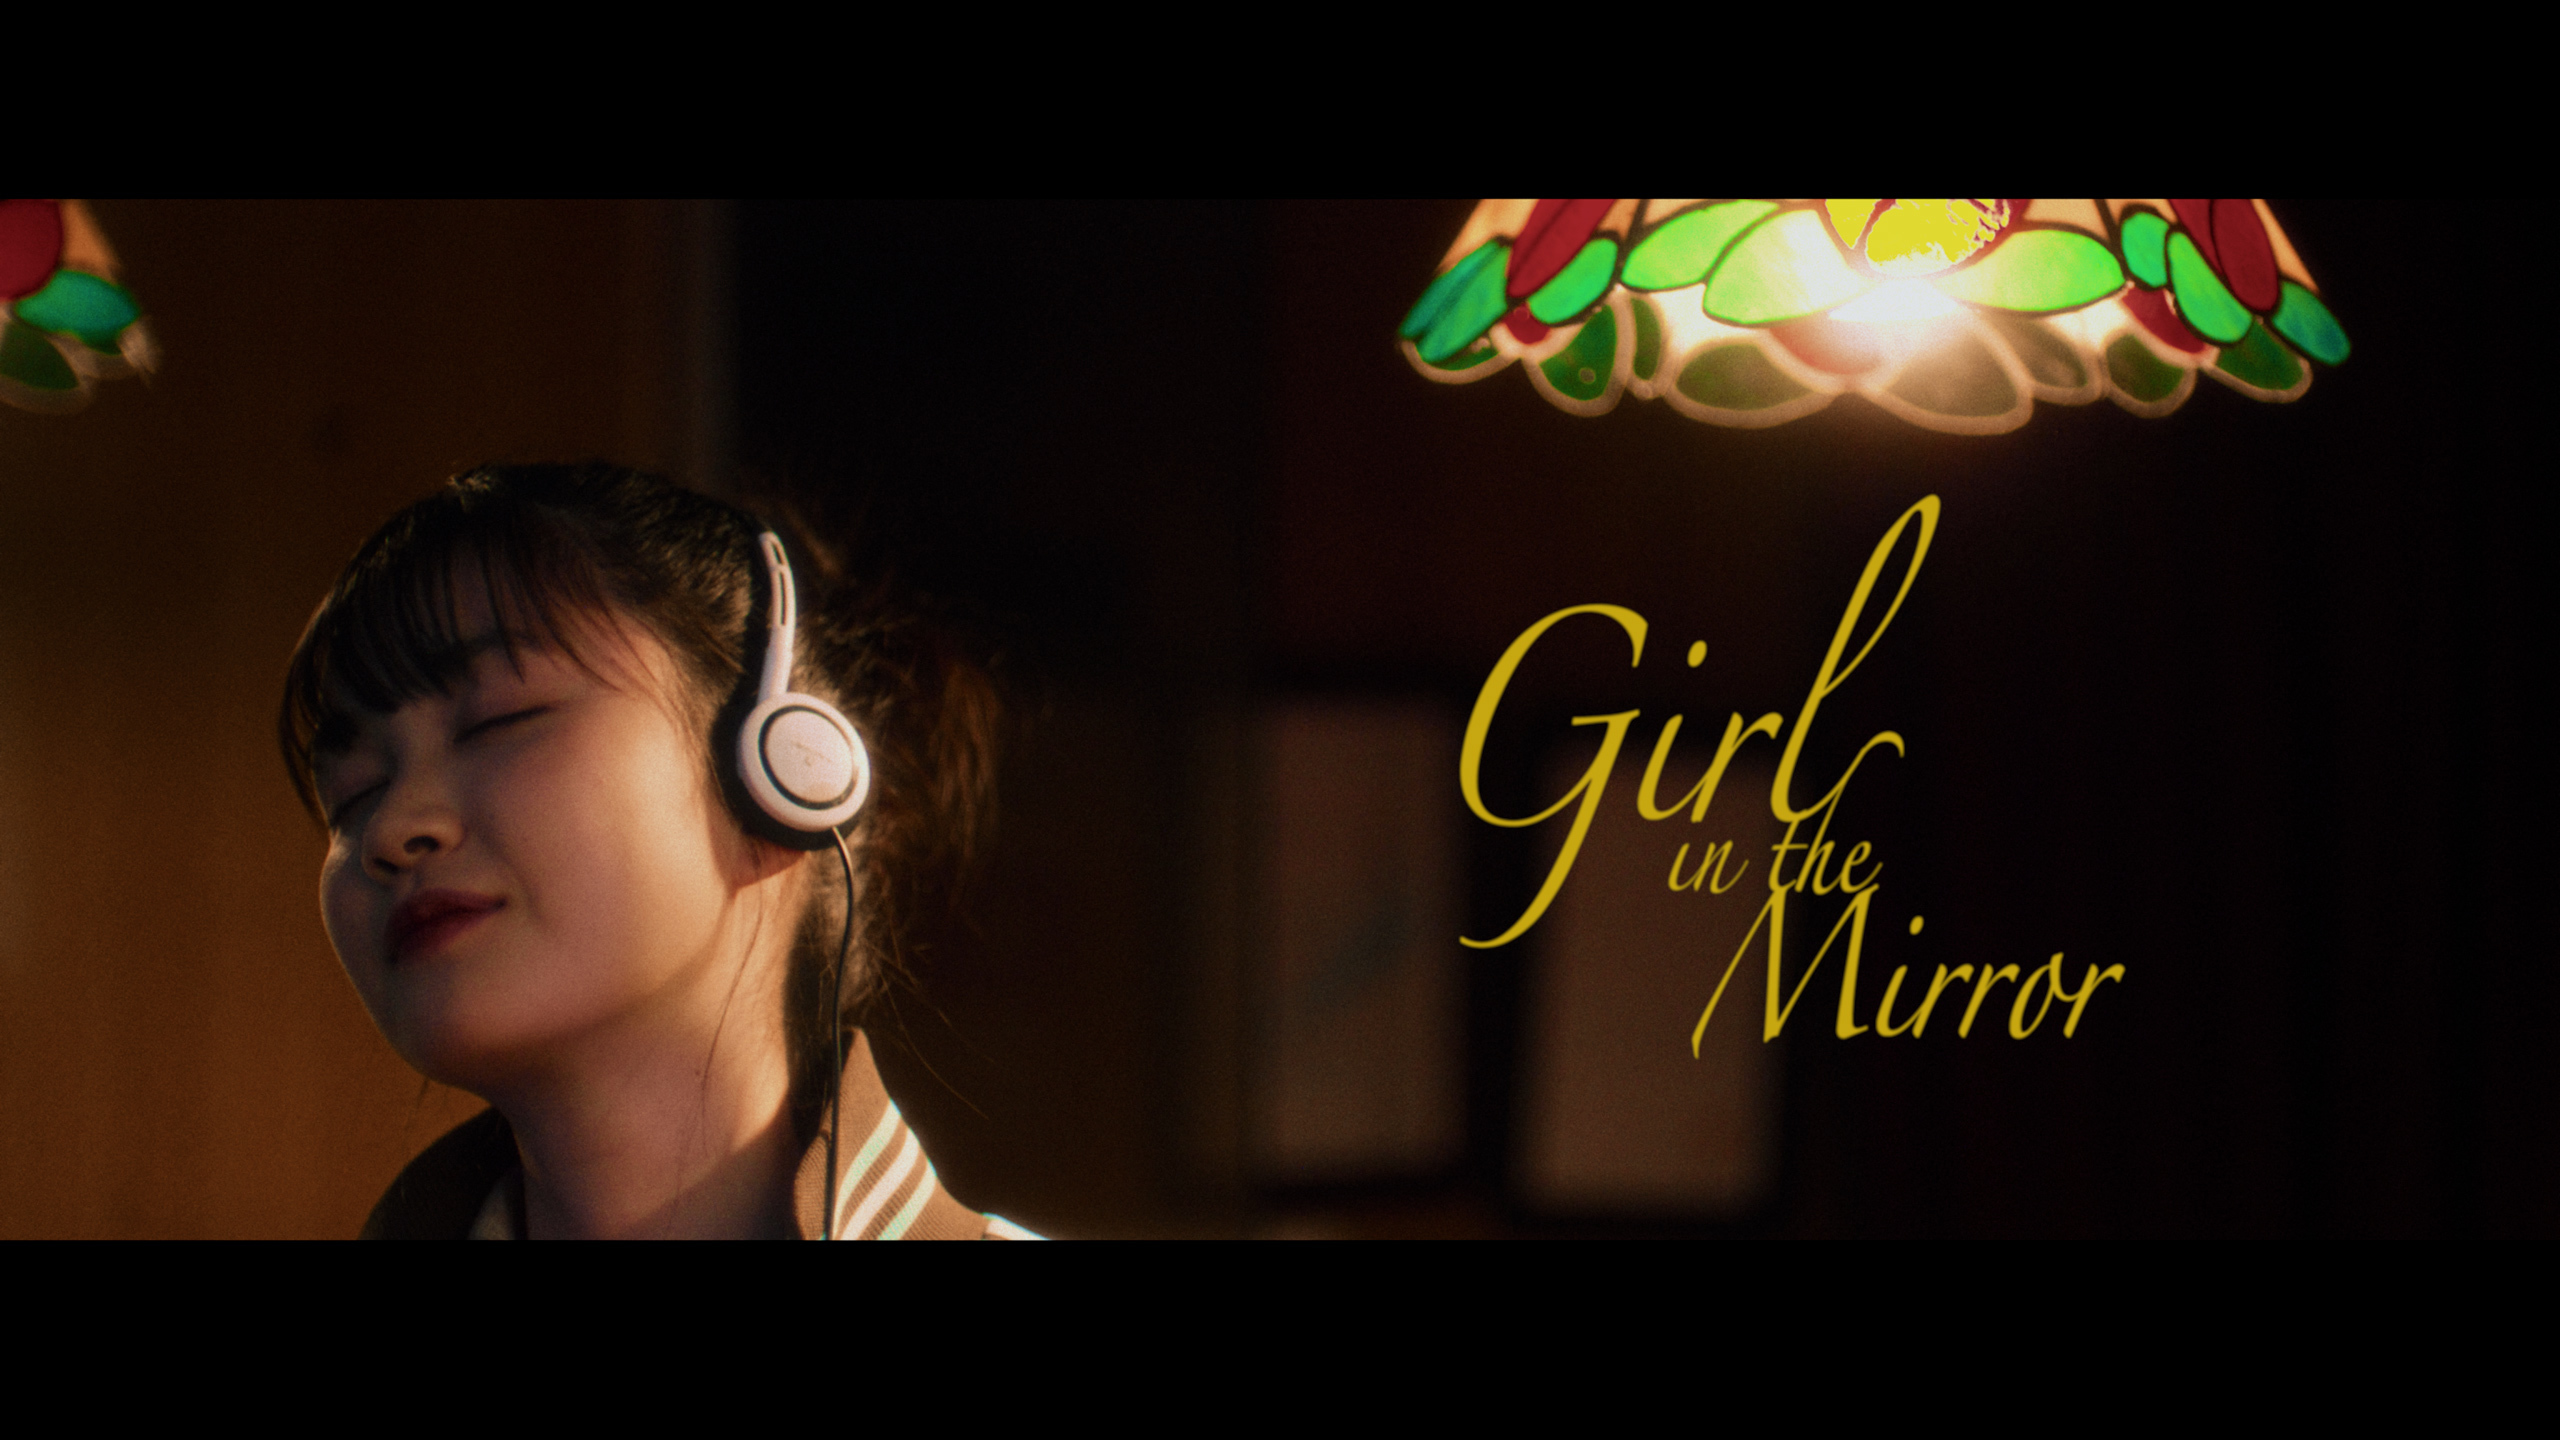 「Girl in the mirror」ミュージックビデオサムネイル